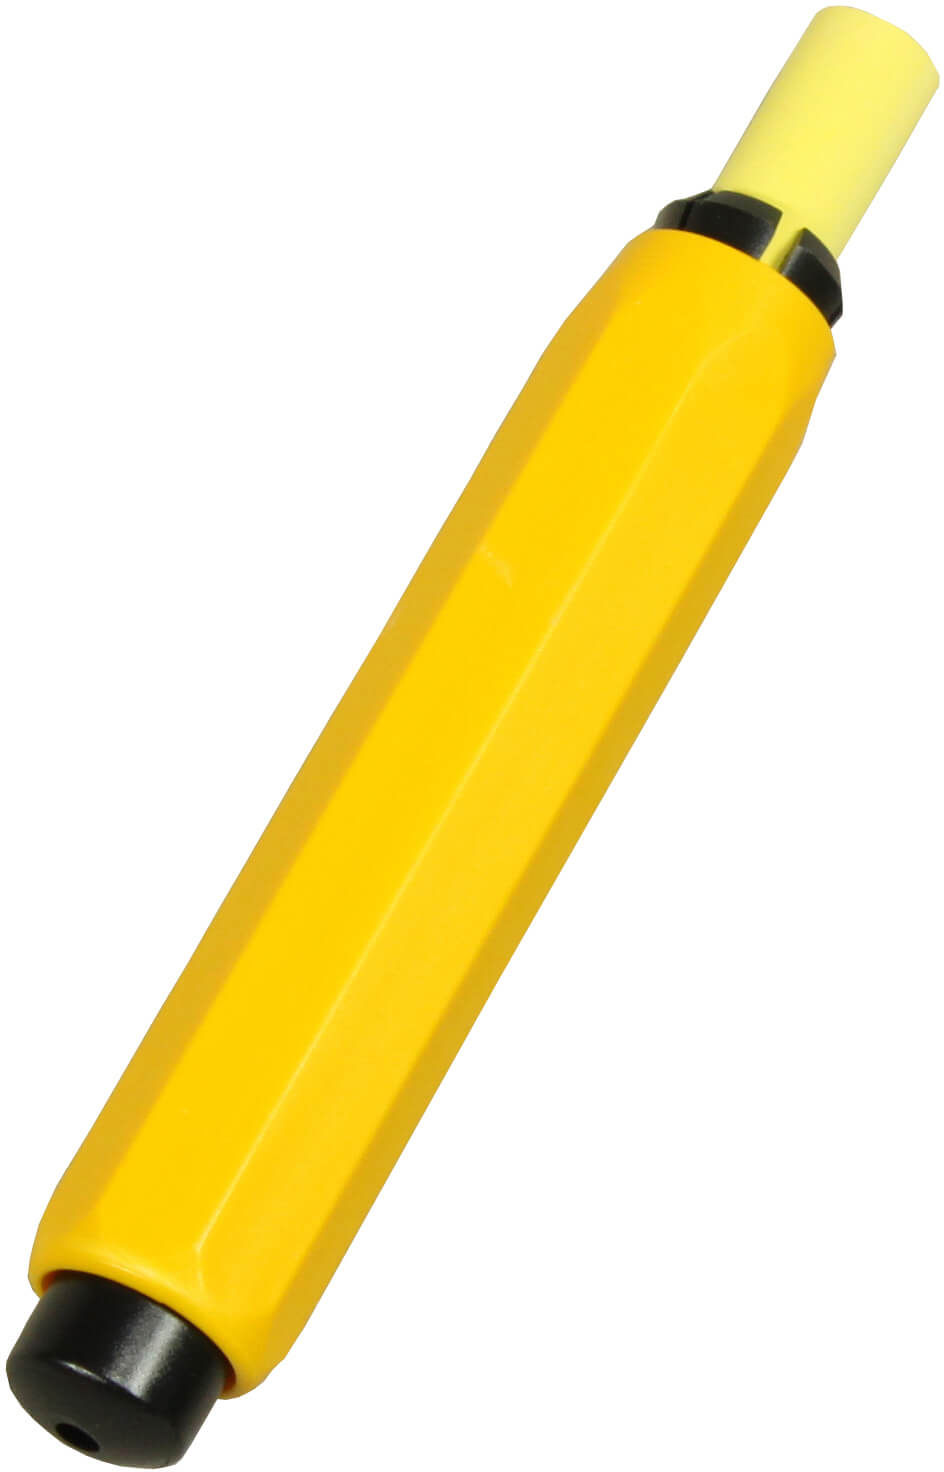 Kreidehalter für Robercolorkreide gelb (1 Stück)